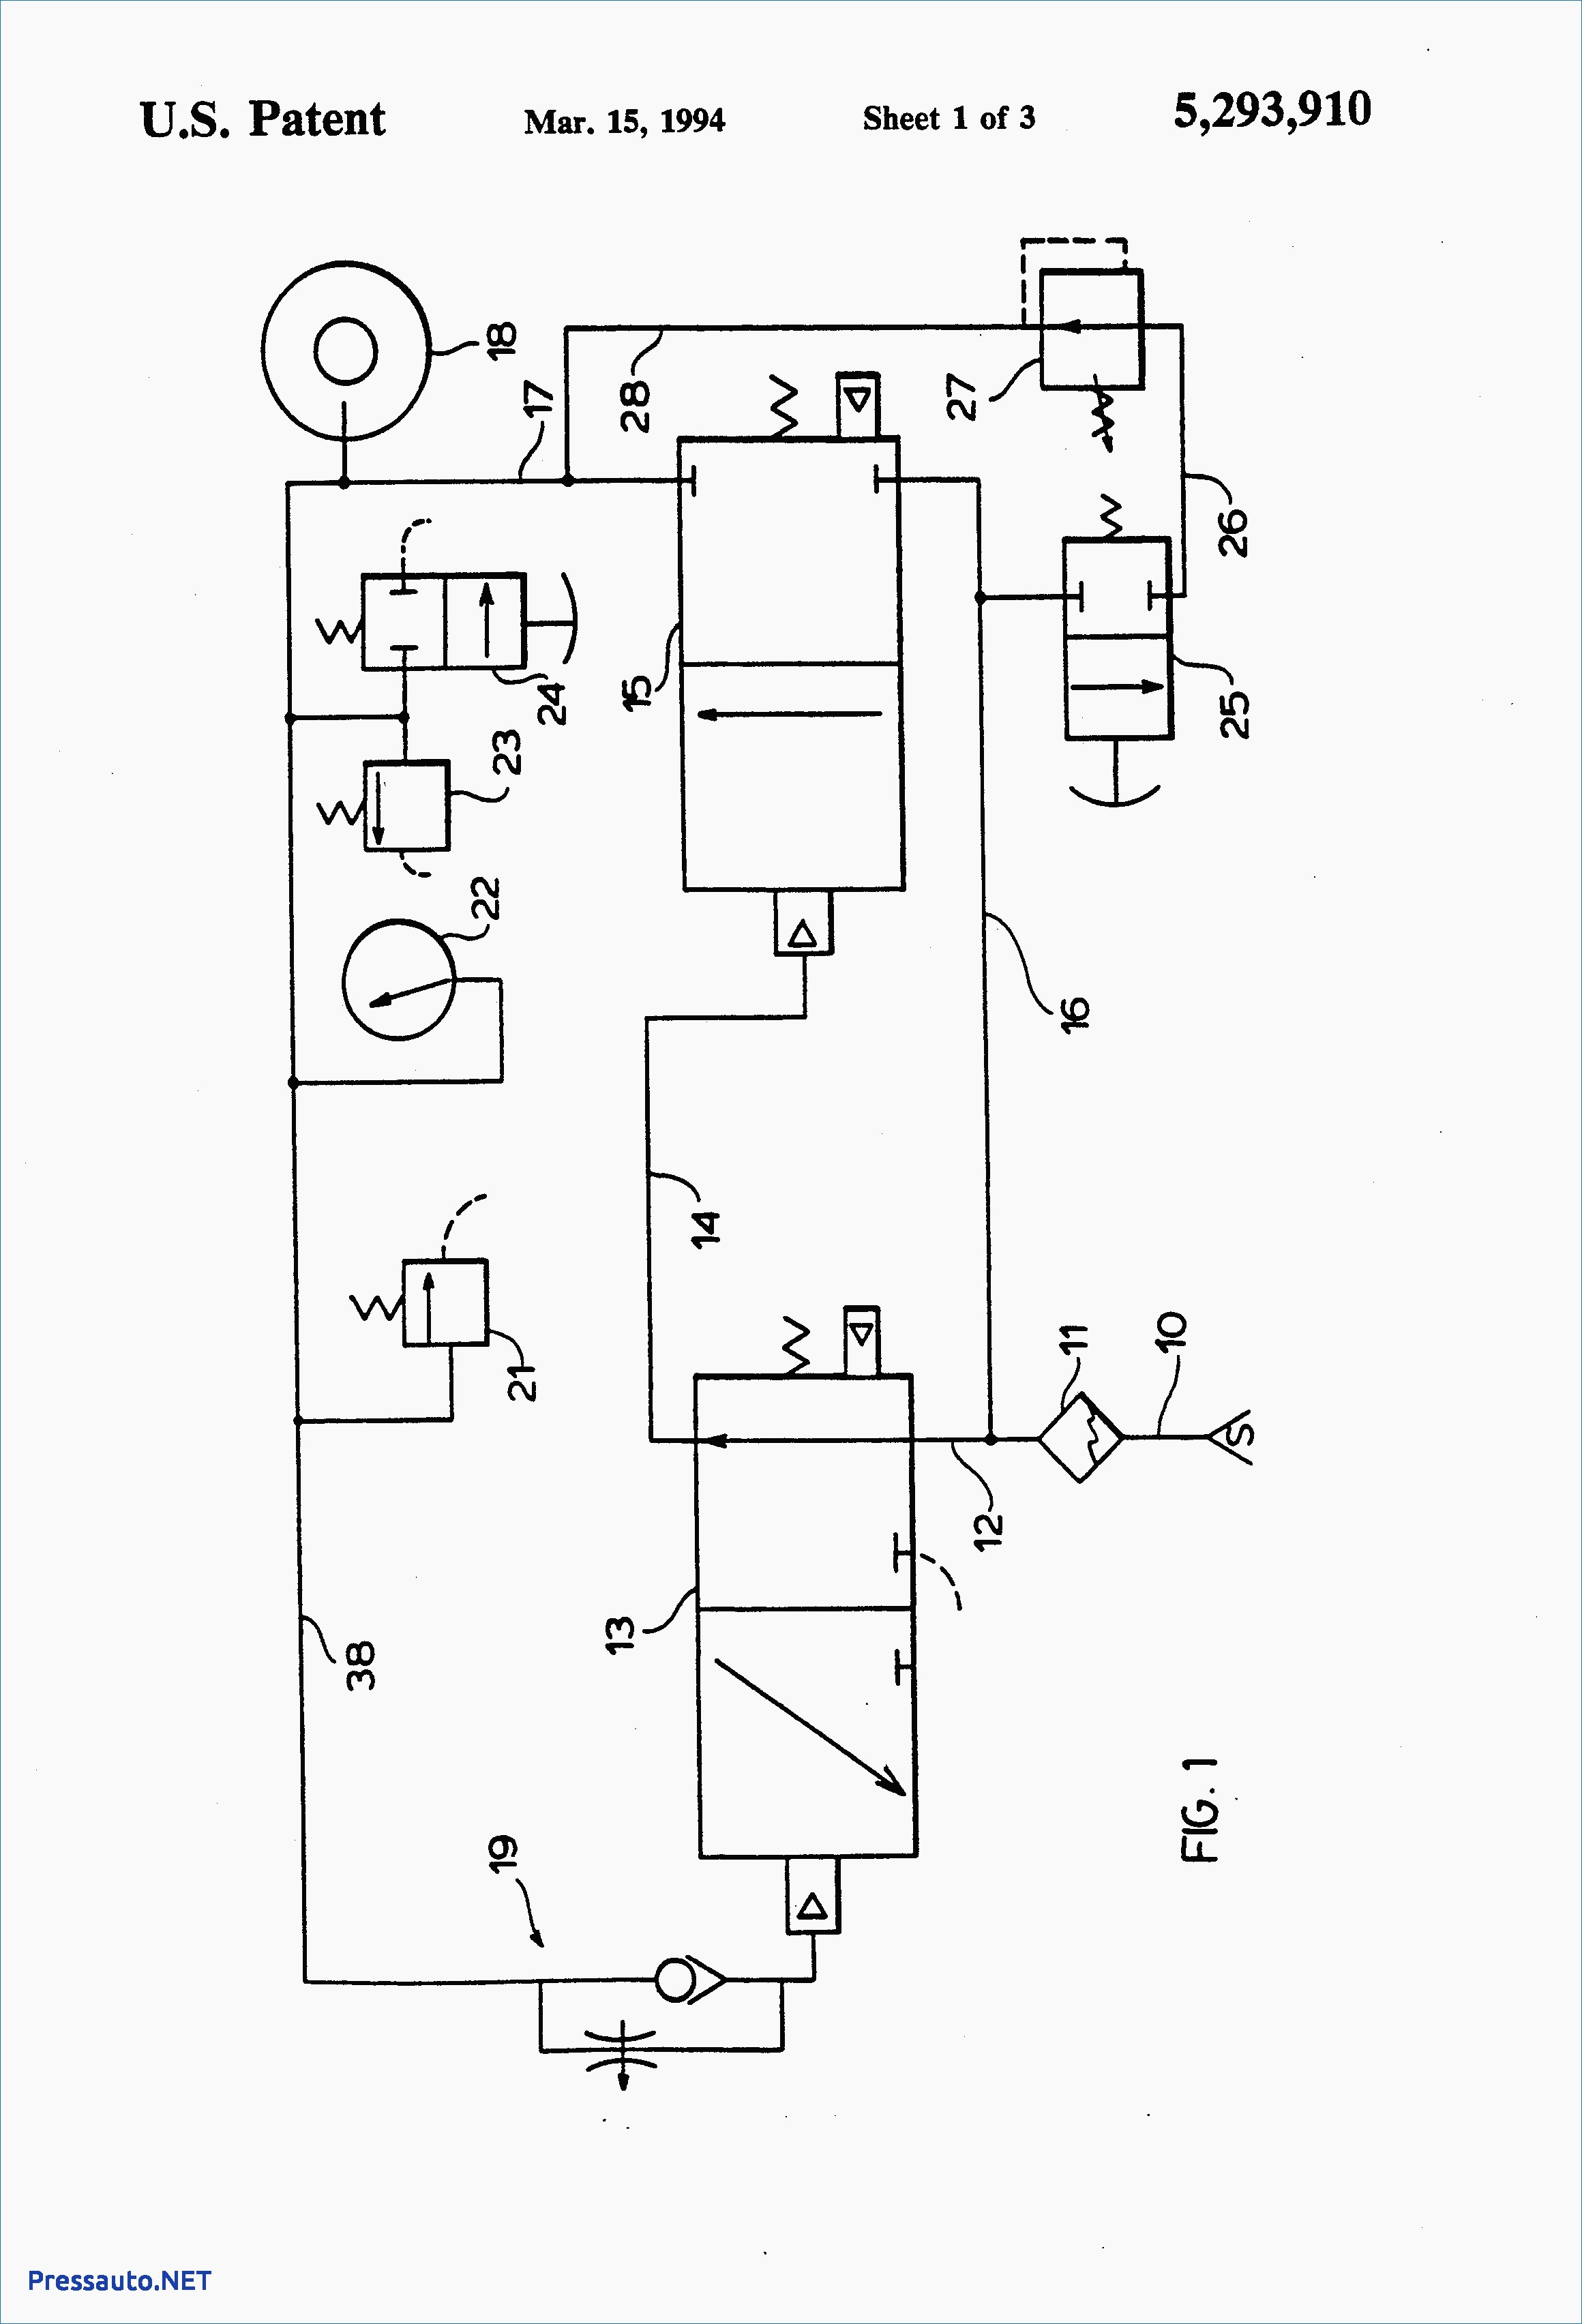 Hydraulic Press Circuit Diagram Pdf iso Hydraulic Schematic Symbols Pdf iso Get Free Image